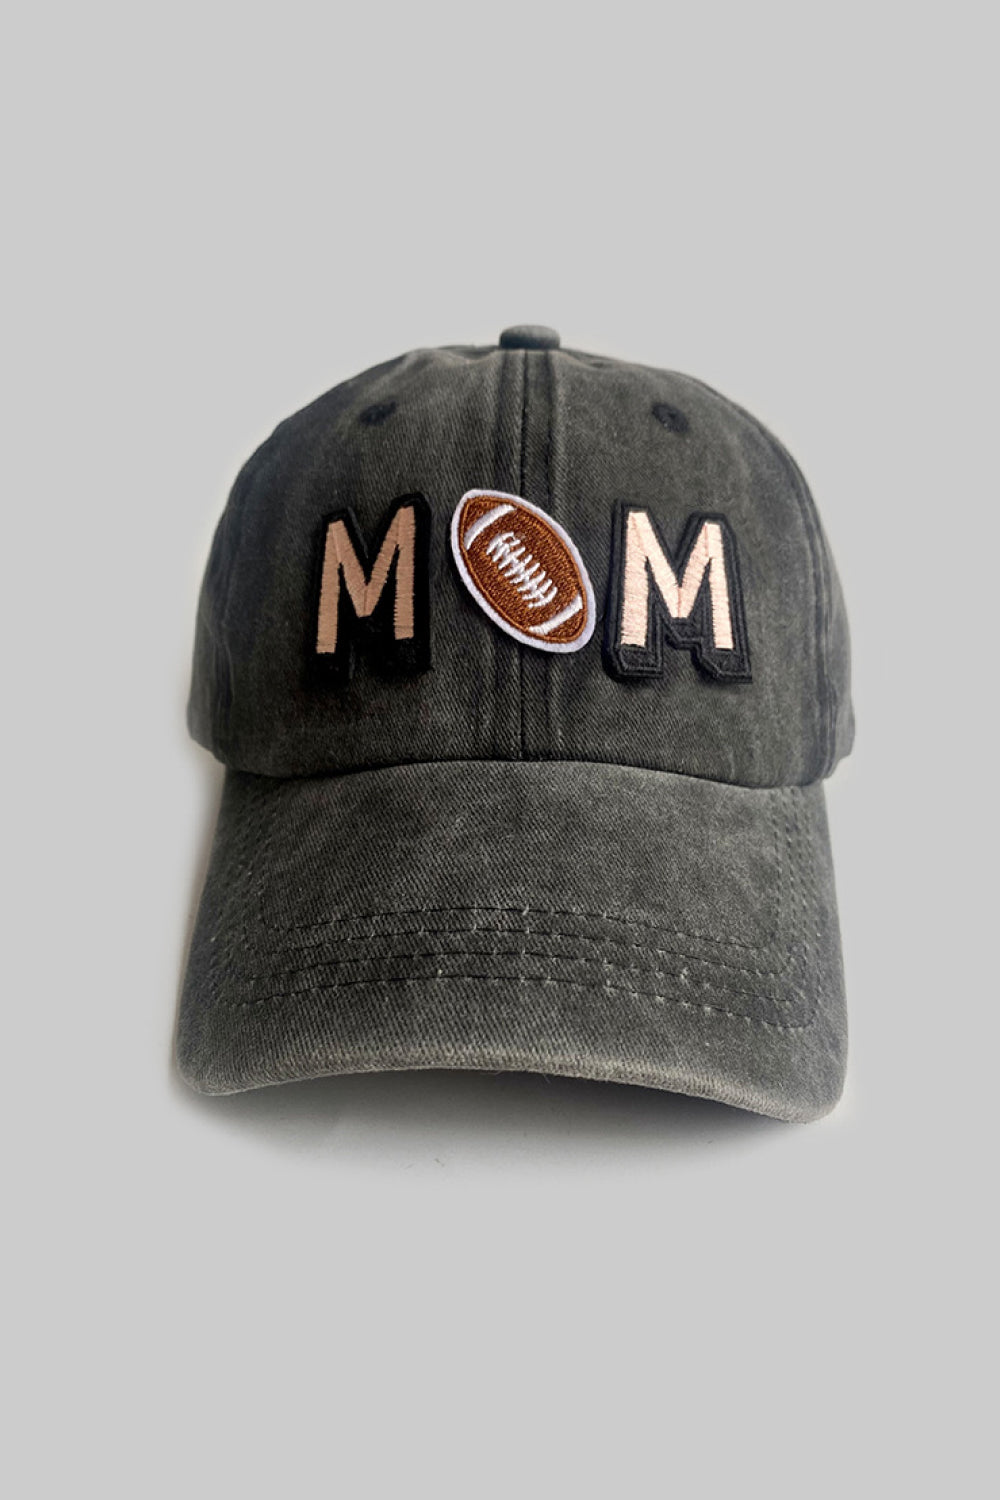 Football MOM Baseball Cap *FINAL SALE*